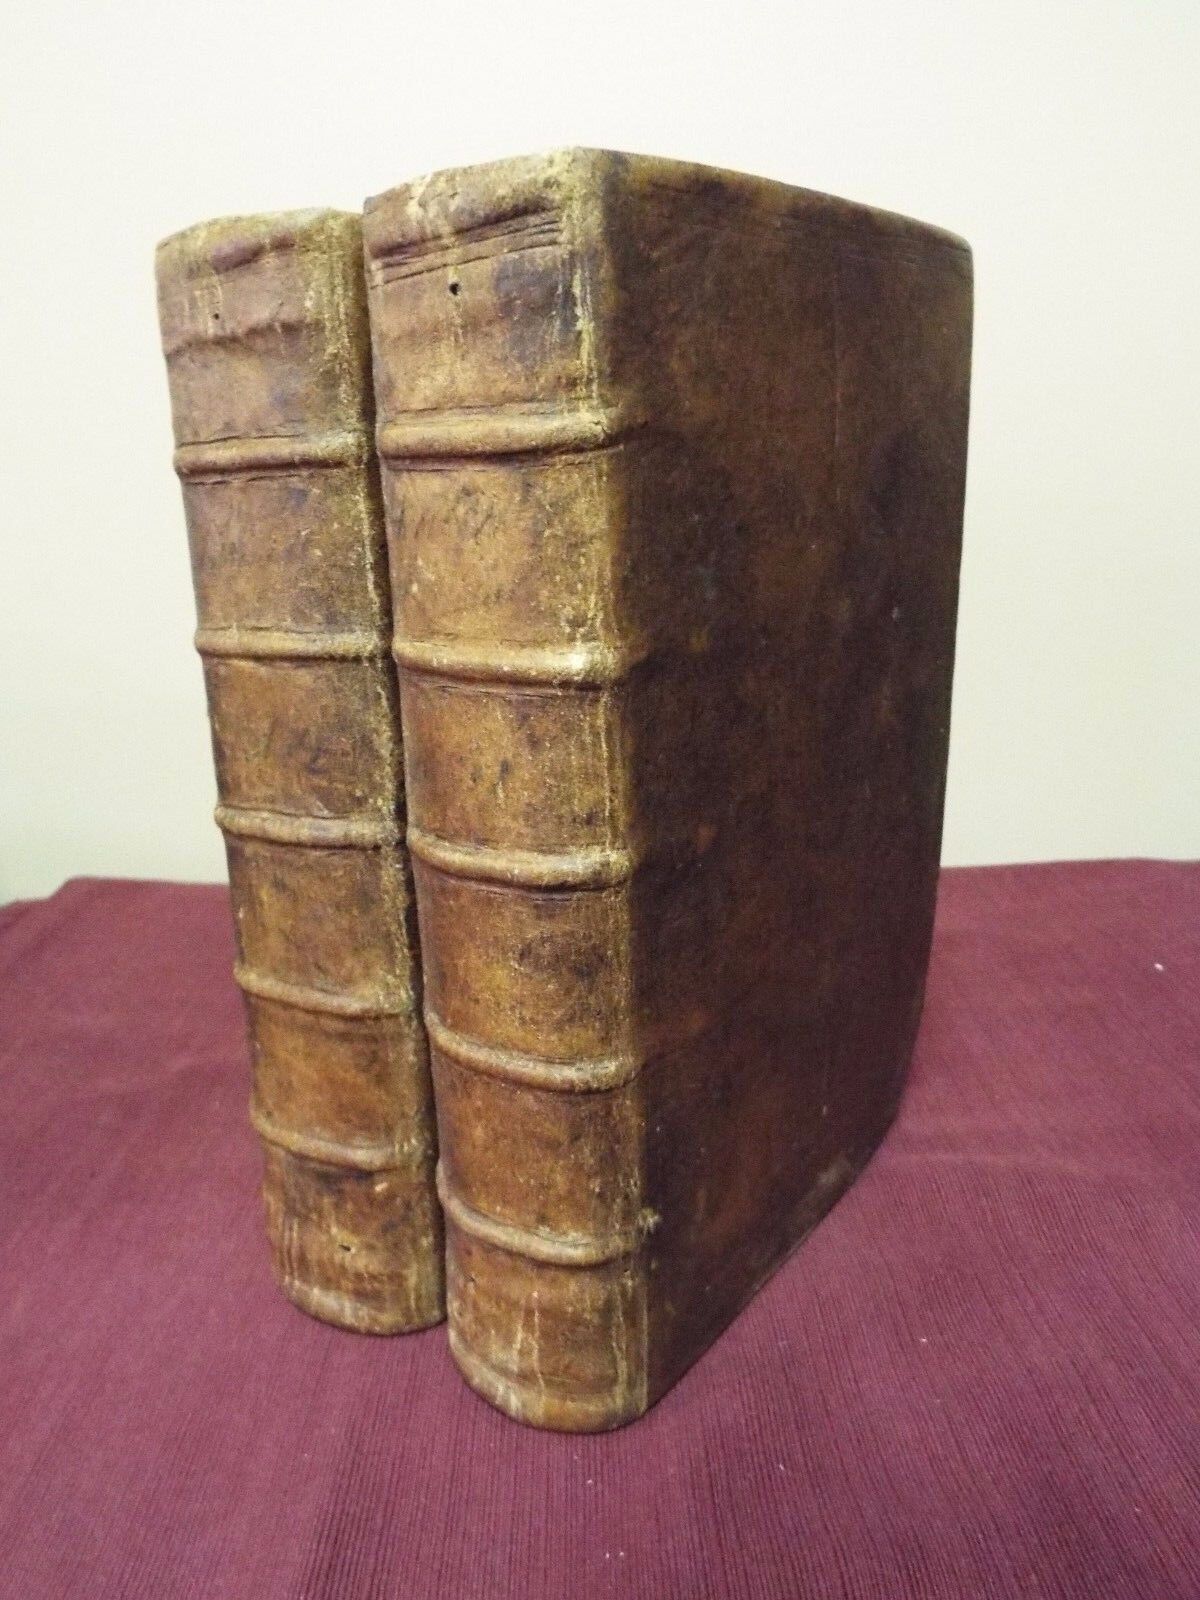 1657 Bible KJV - First / Only English Official Dutch Bible - 2 Volumes